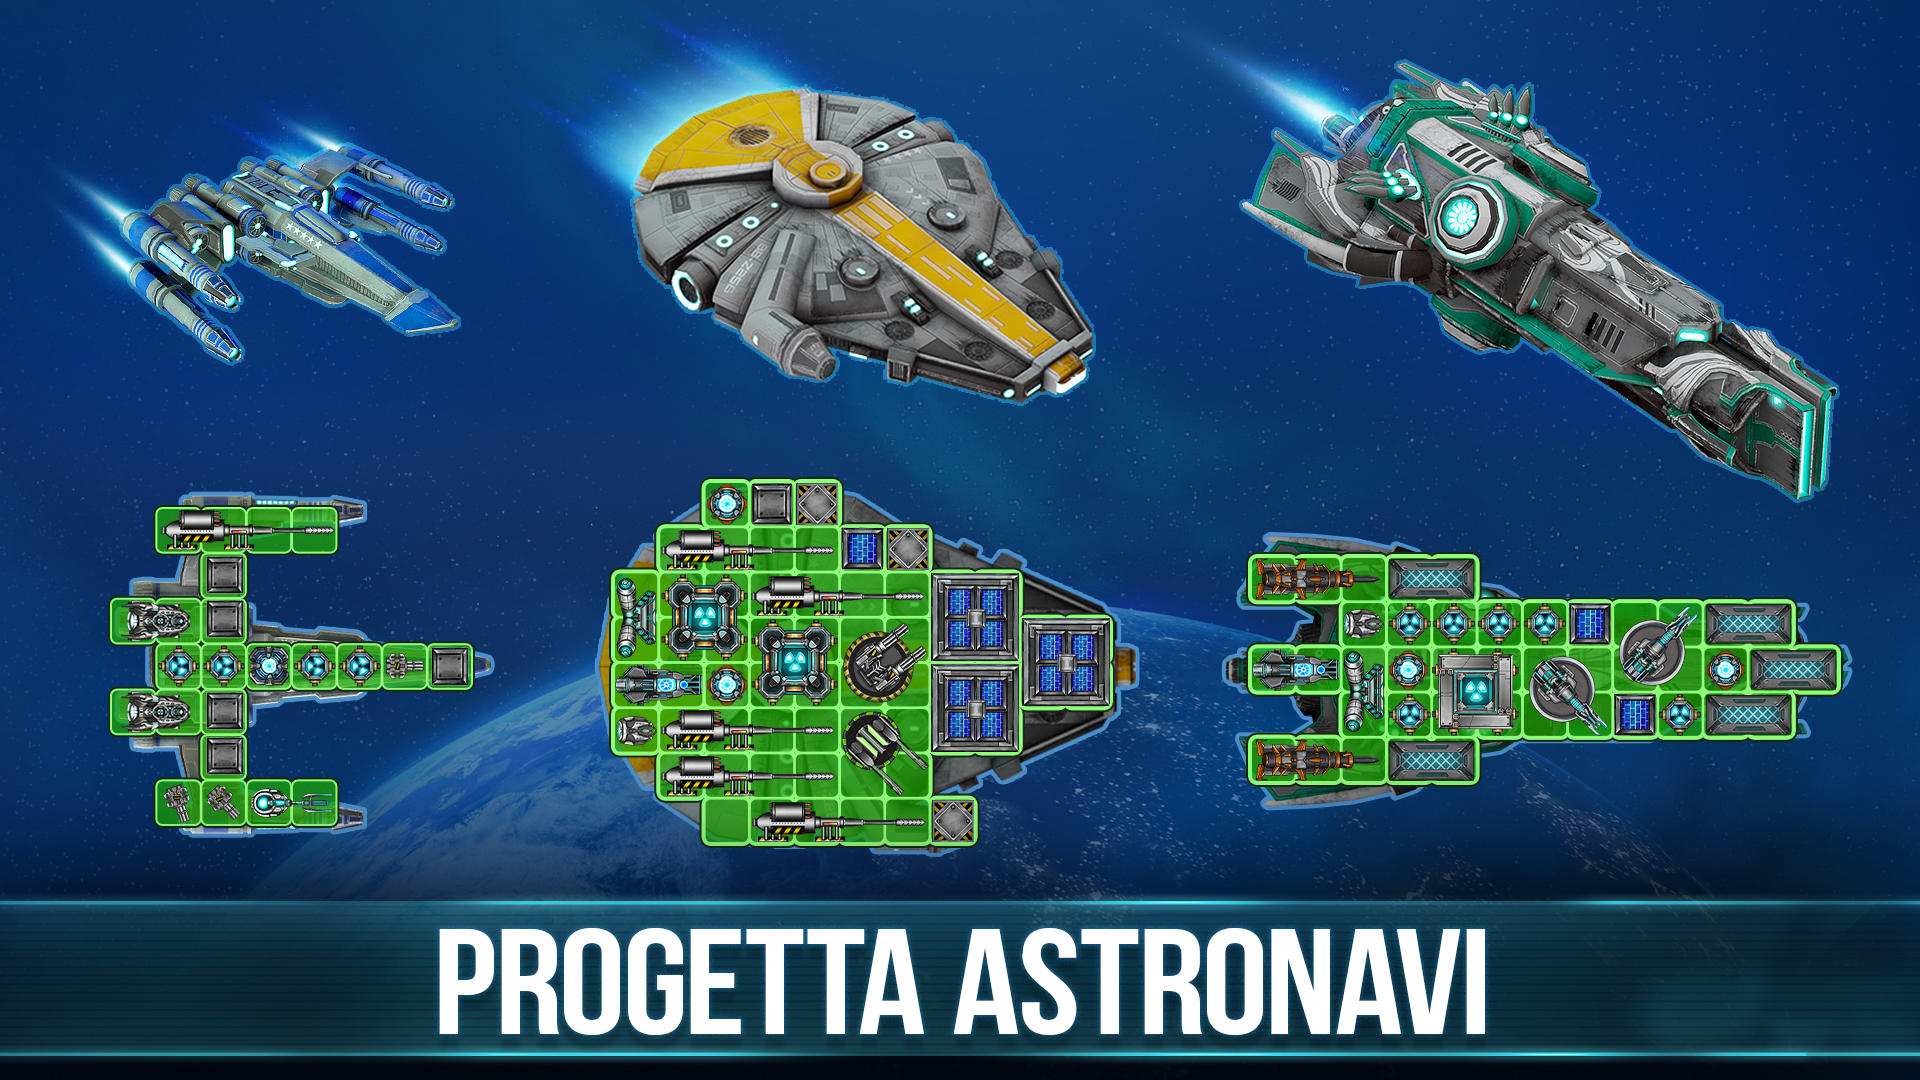 Screenshot 1 of Space Arena－Progetta astronavi 3.9.2